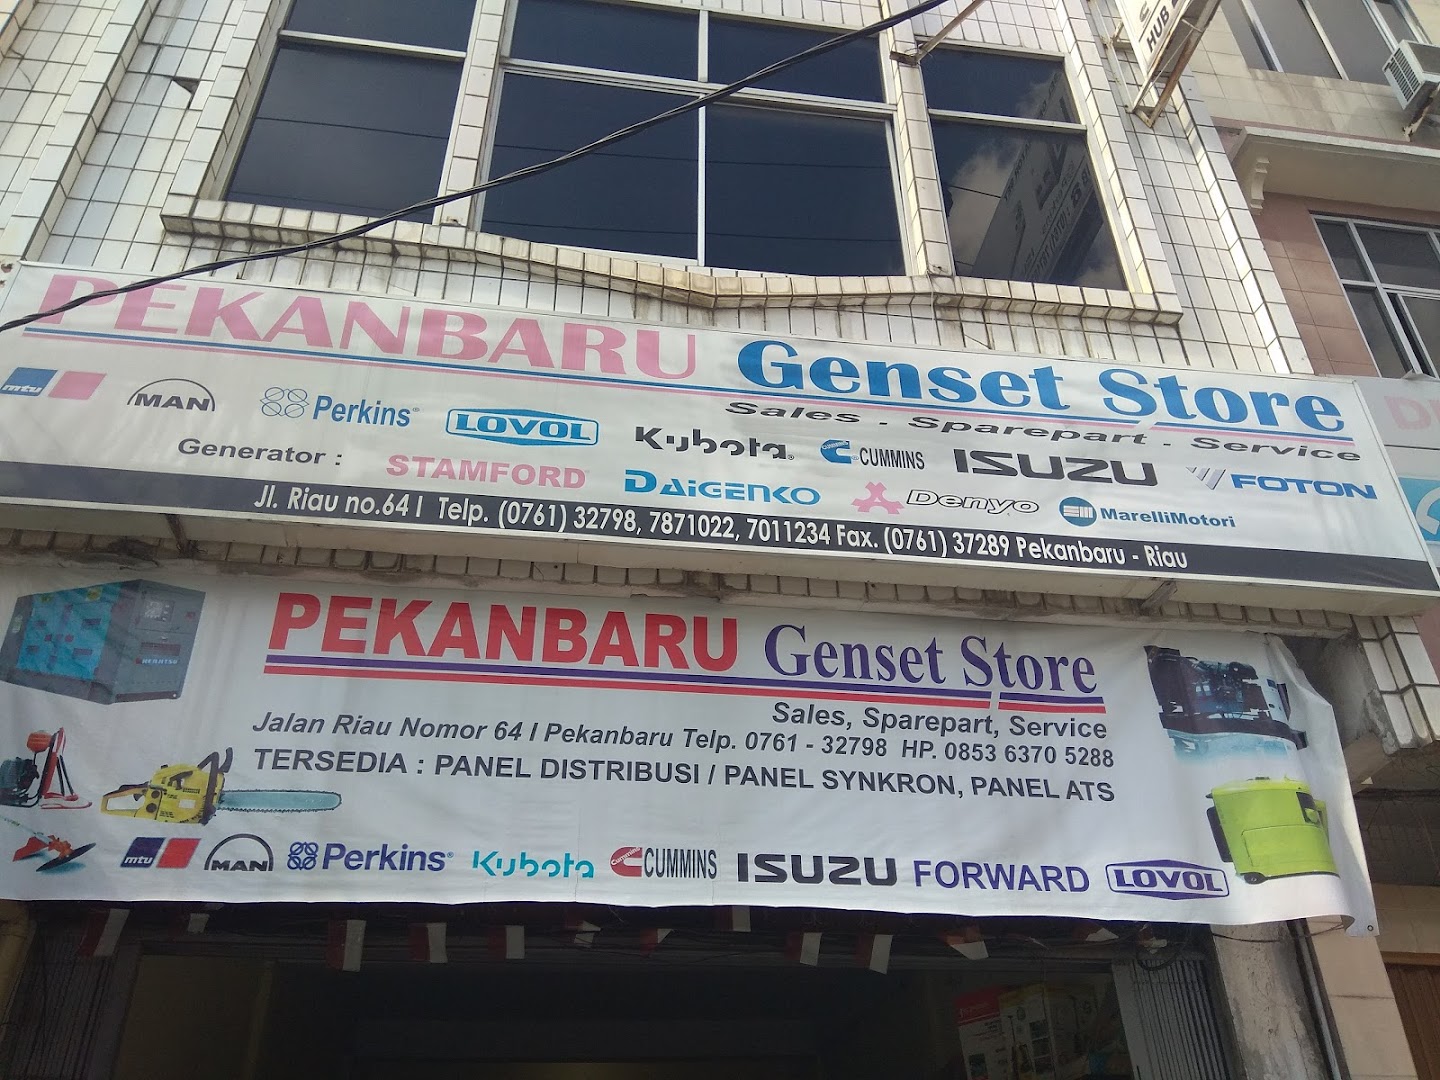 Pekanbaru Genset Store Photo